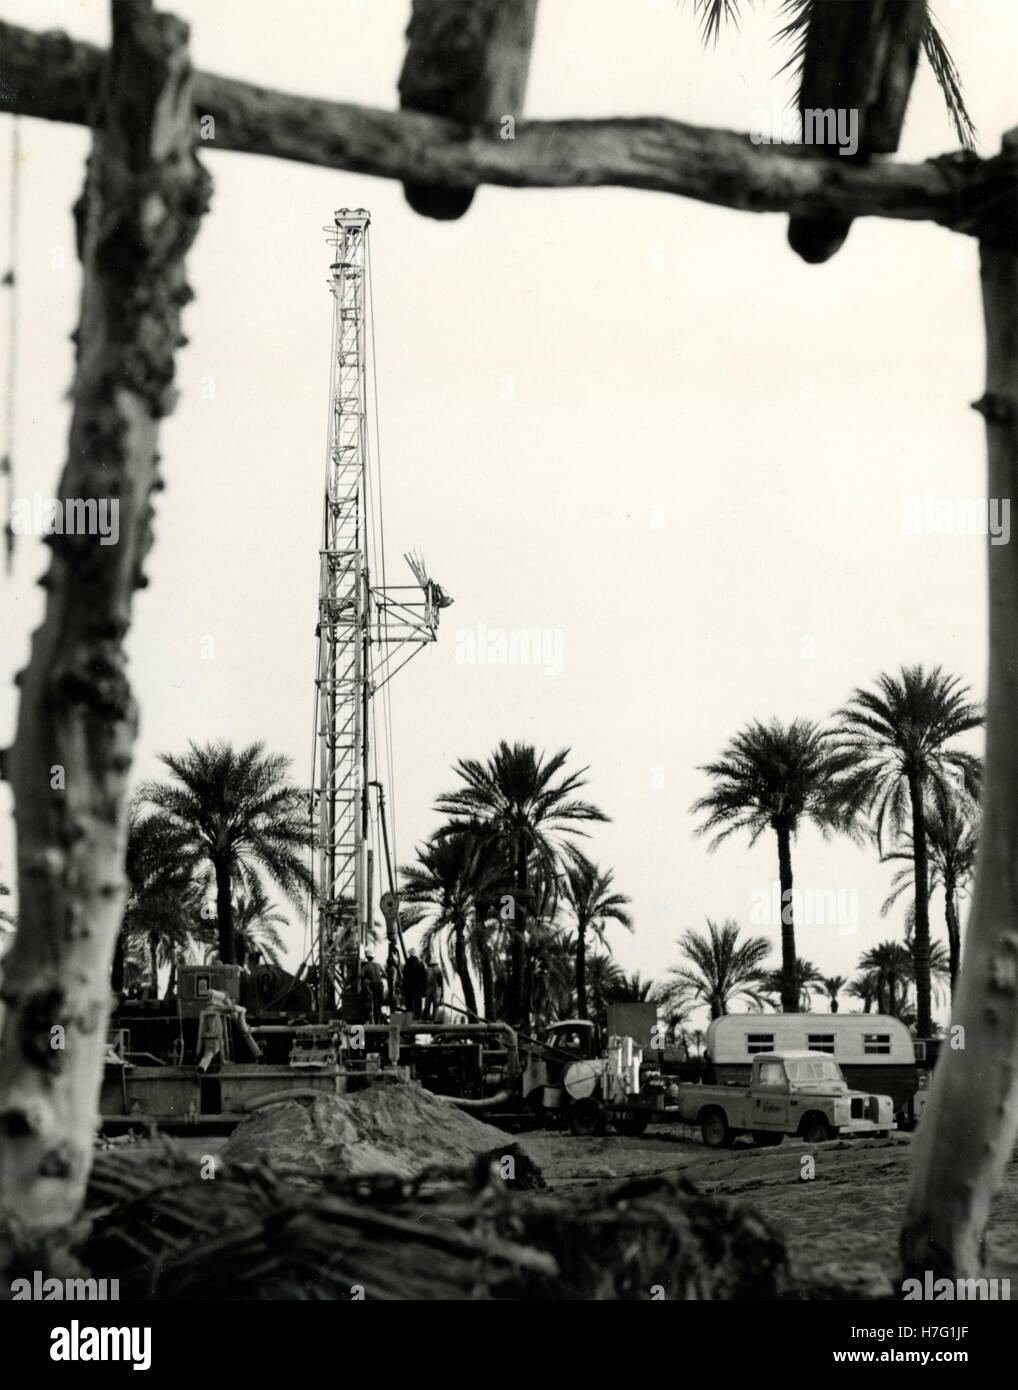 Drilling rig in the desert, Libya Stock Photo